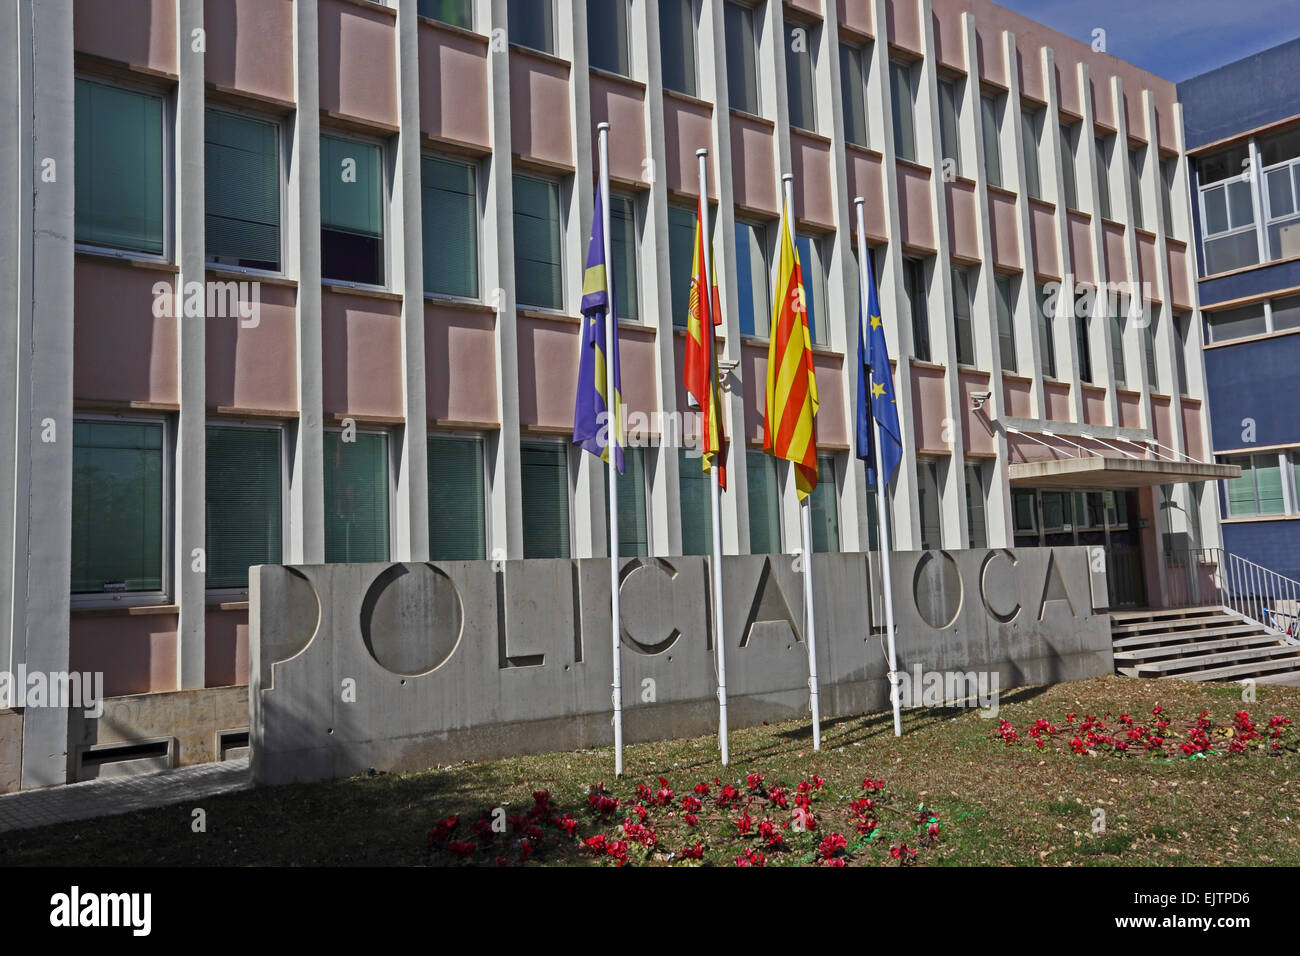 Policia Local station, Salou, Catalonia, Spain Stock Photo